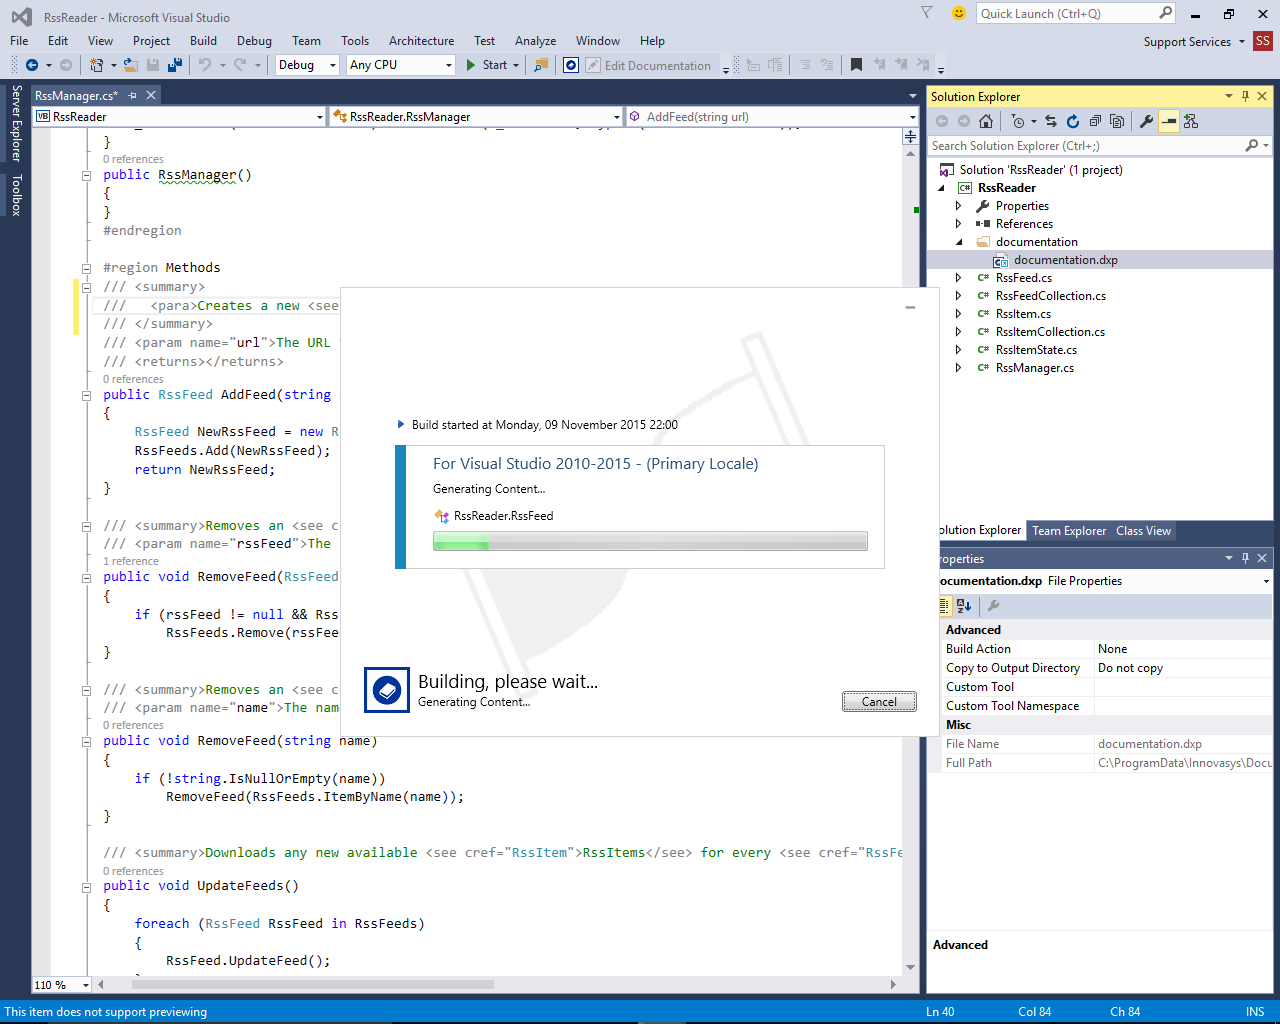 Build from Visual Studio